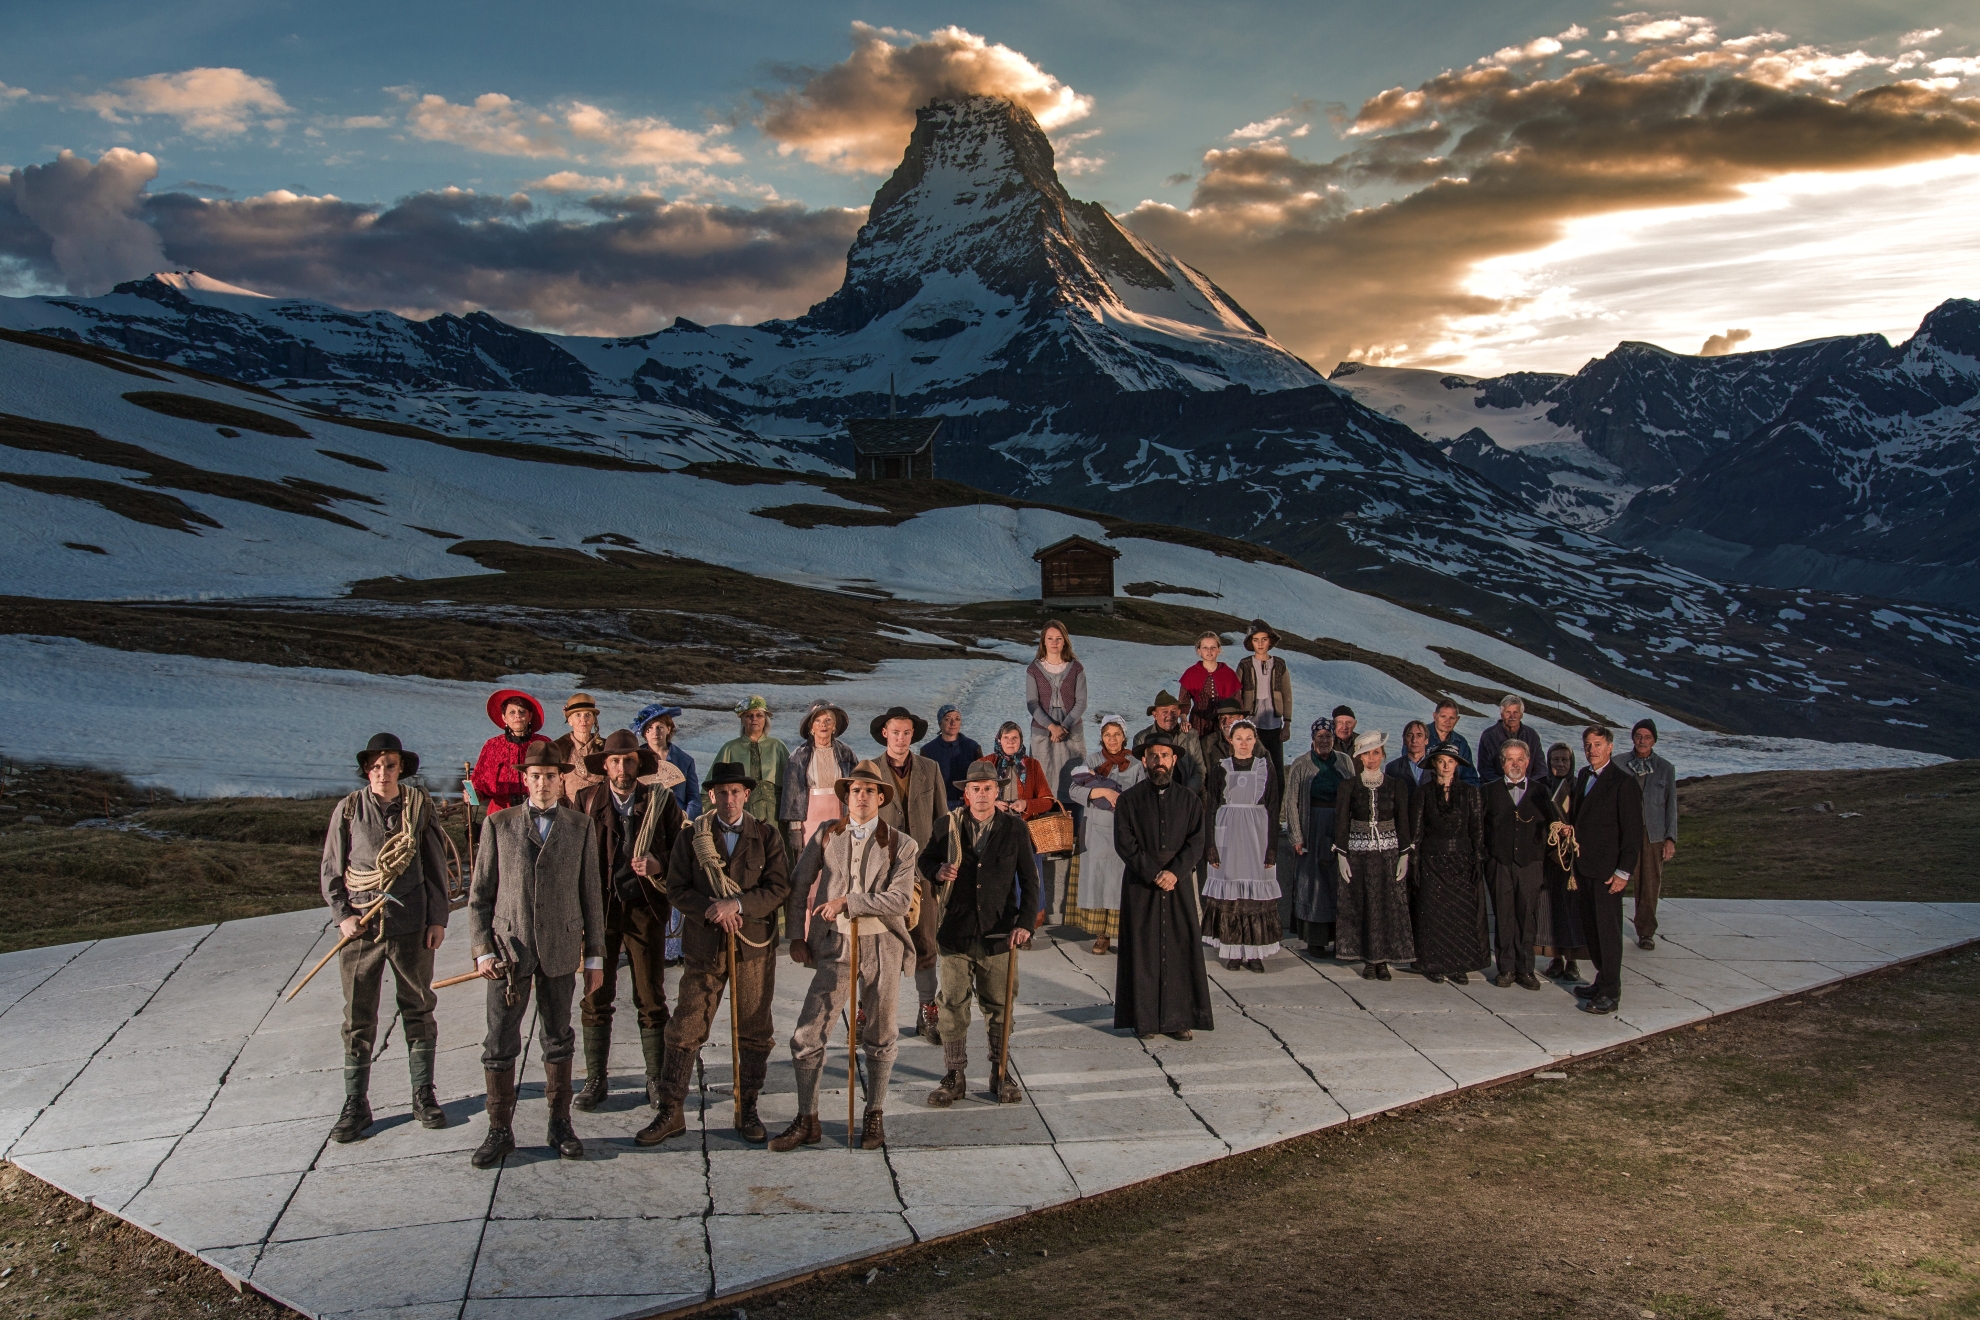  актеры пьесы The Matterhorn Story на сцене у Маттерхорна, Церматт, Швейцария